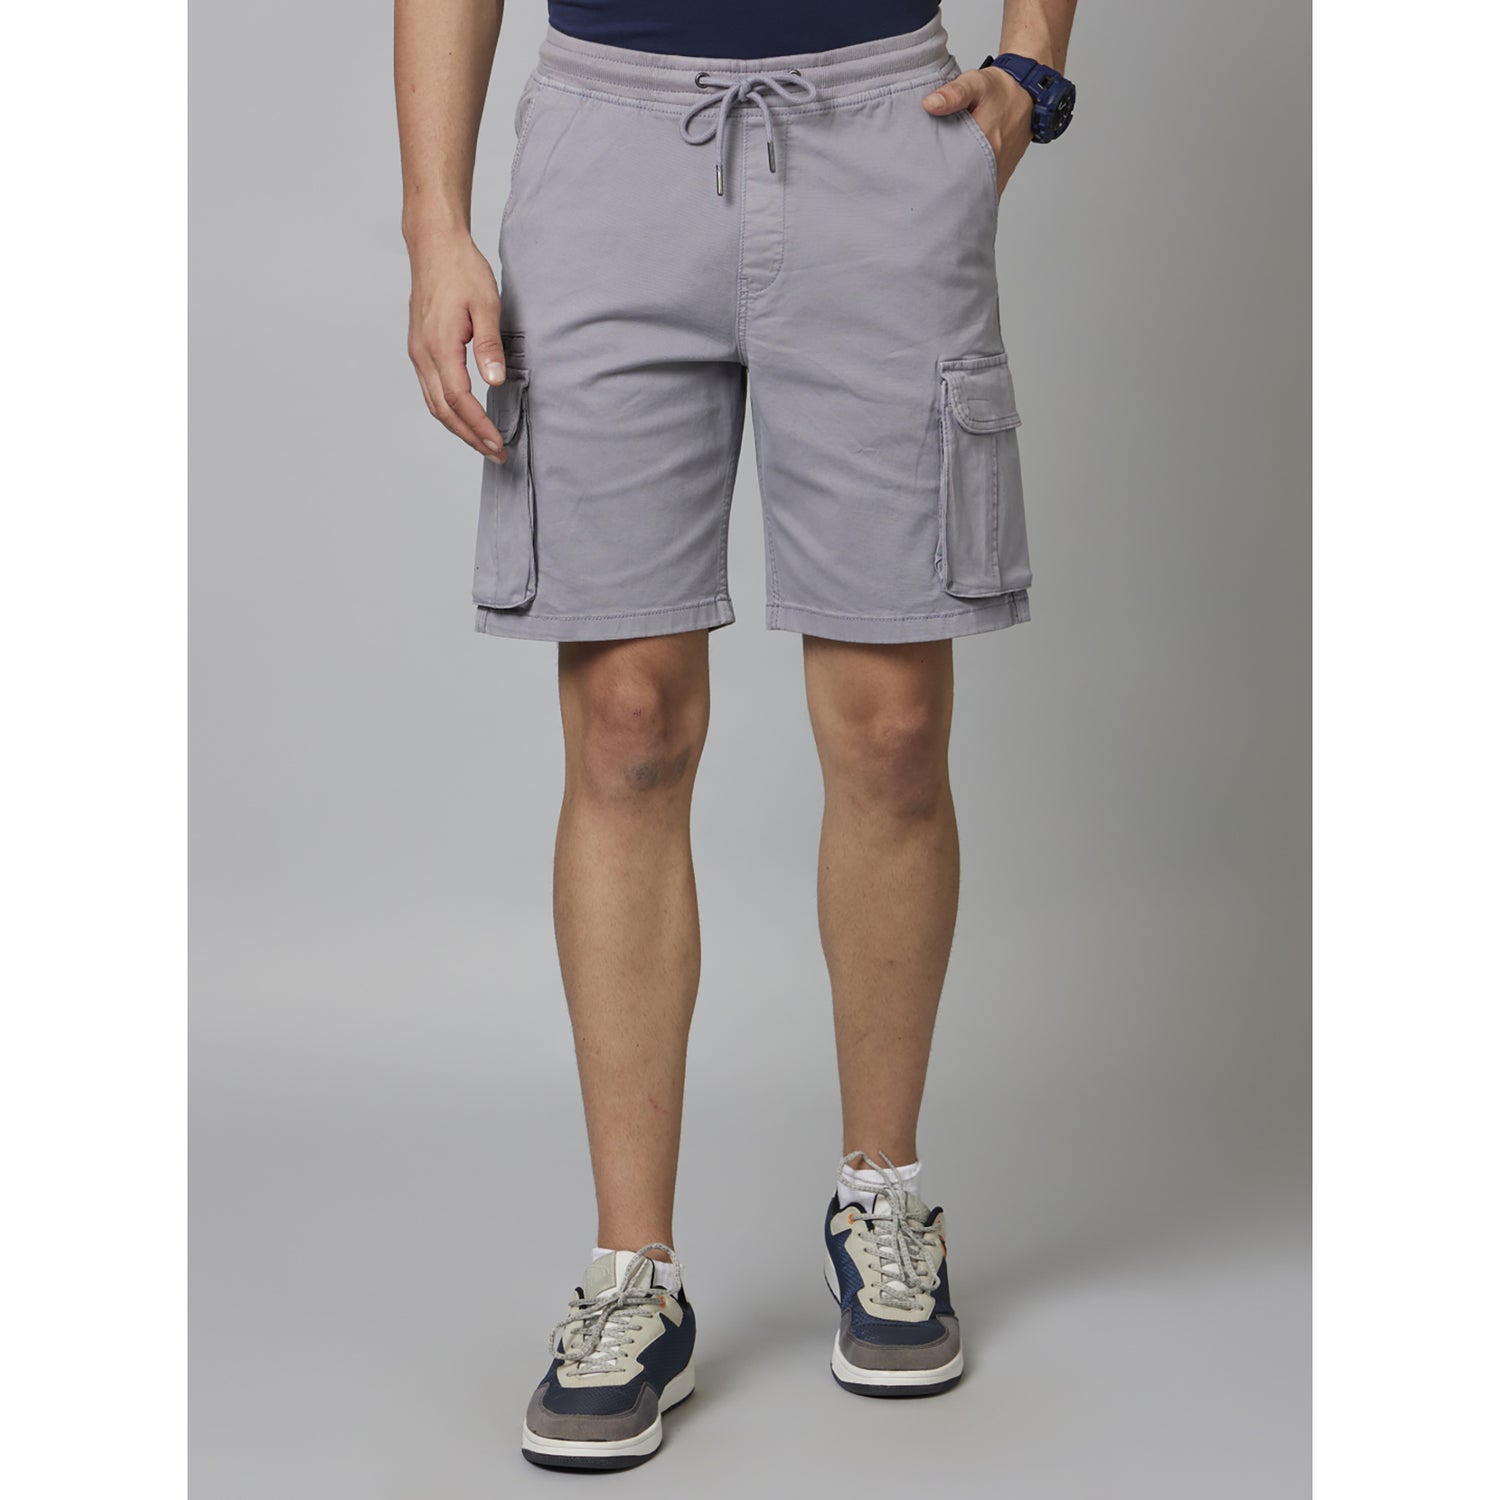 Grey Solid Cotton Blend Shorts (DORIBM)